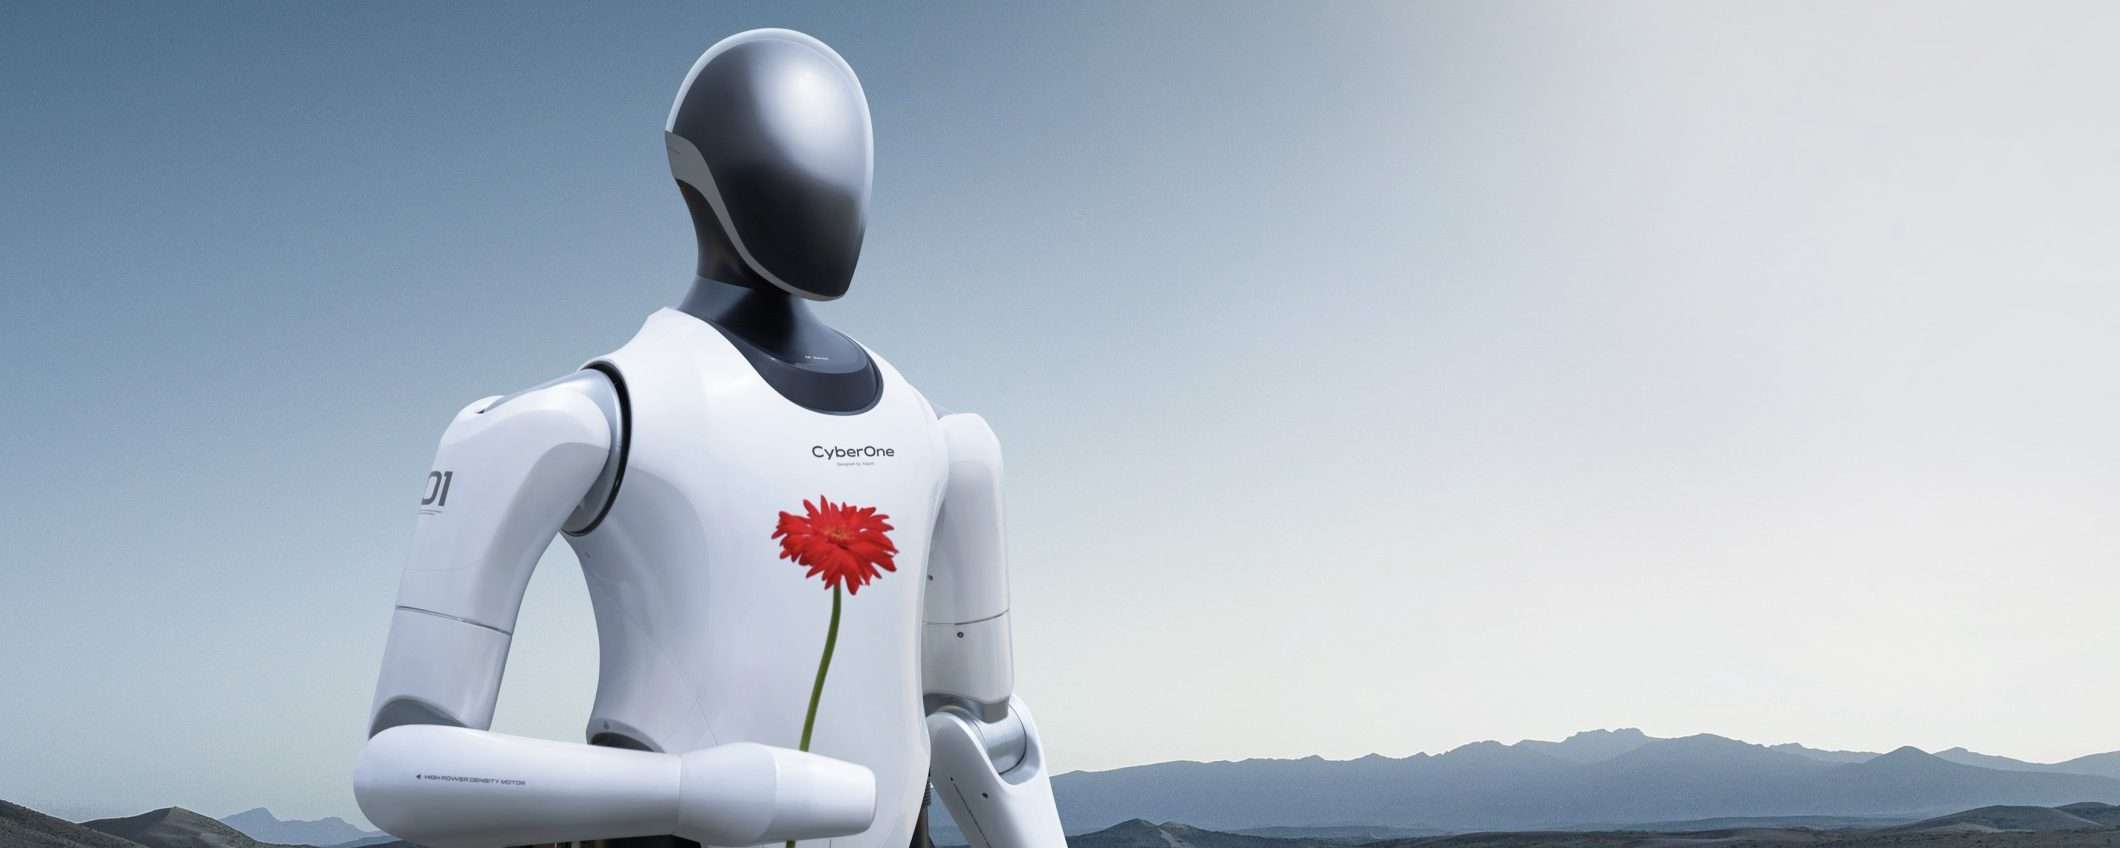 CyberOne è il robot umanoide di Xiaomi